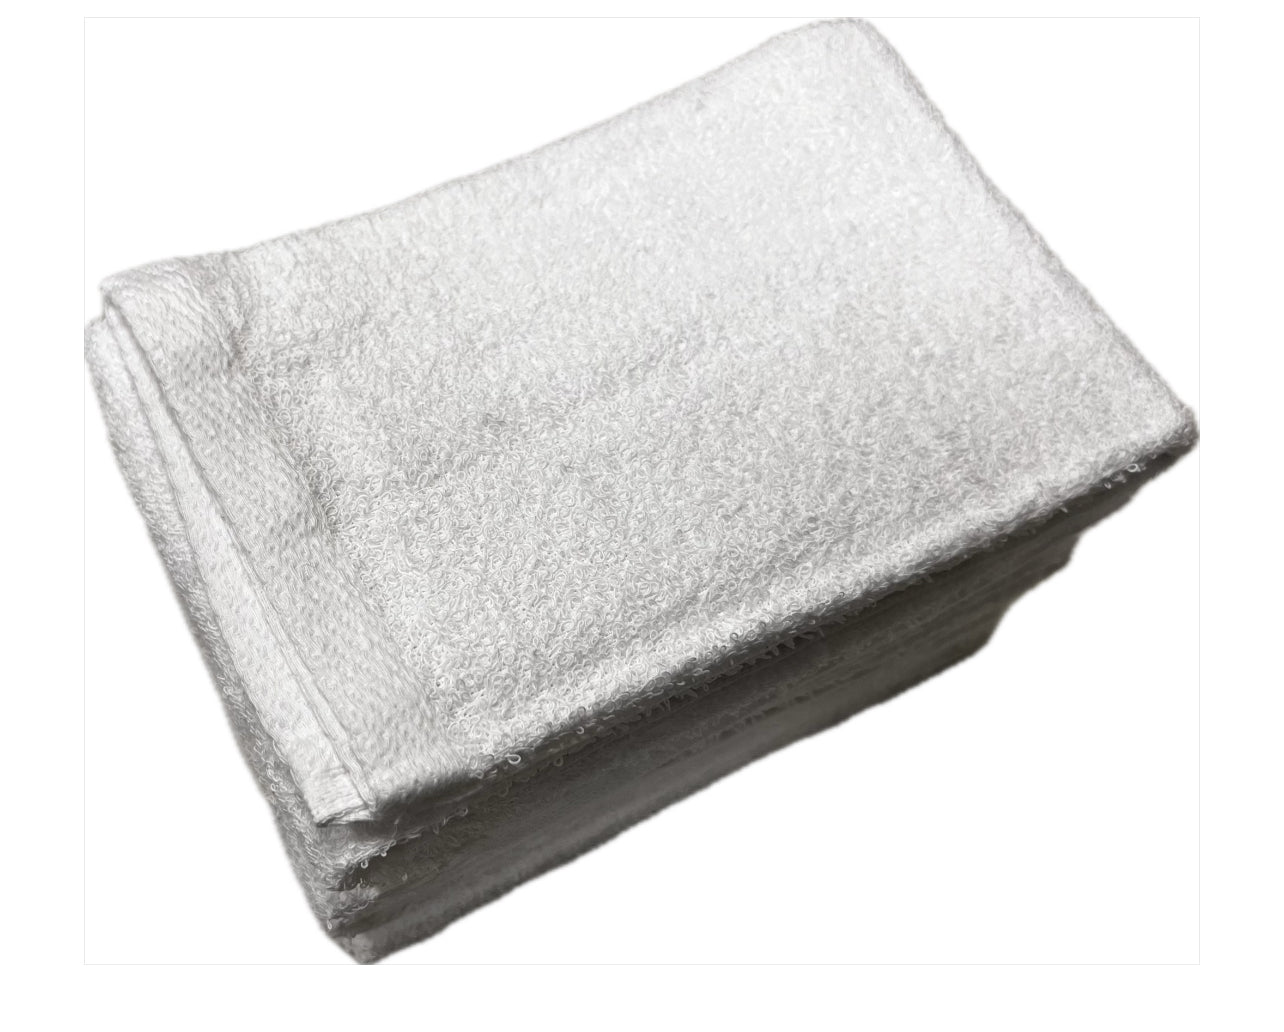 ***New Item*** ProTex Bleach Guard™ White Towel